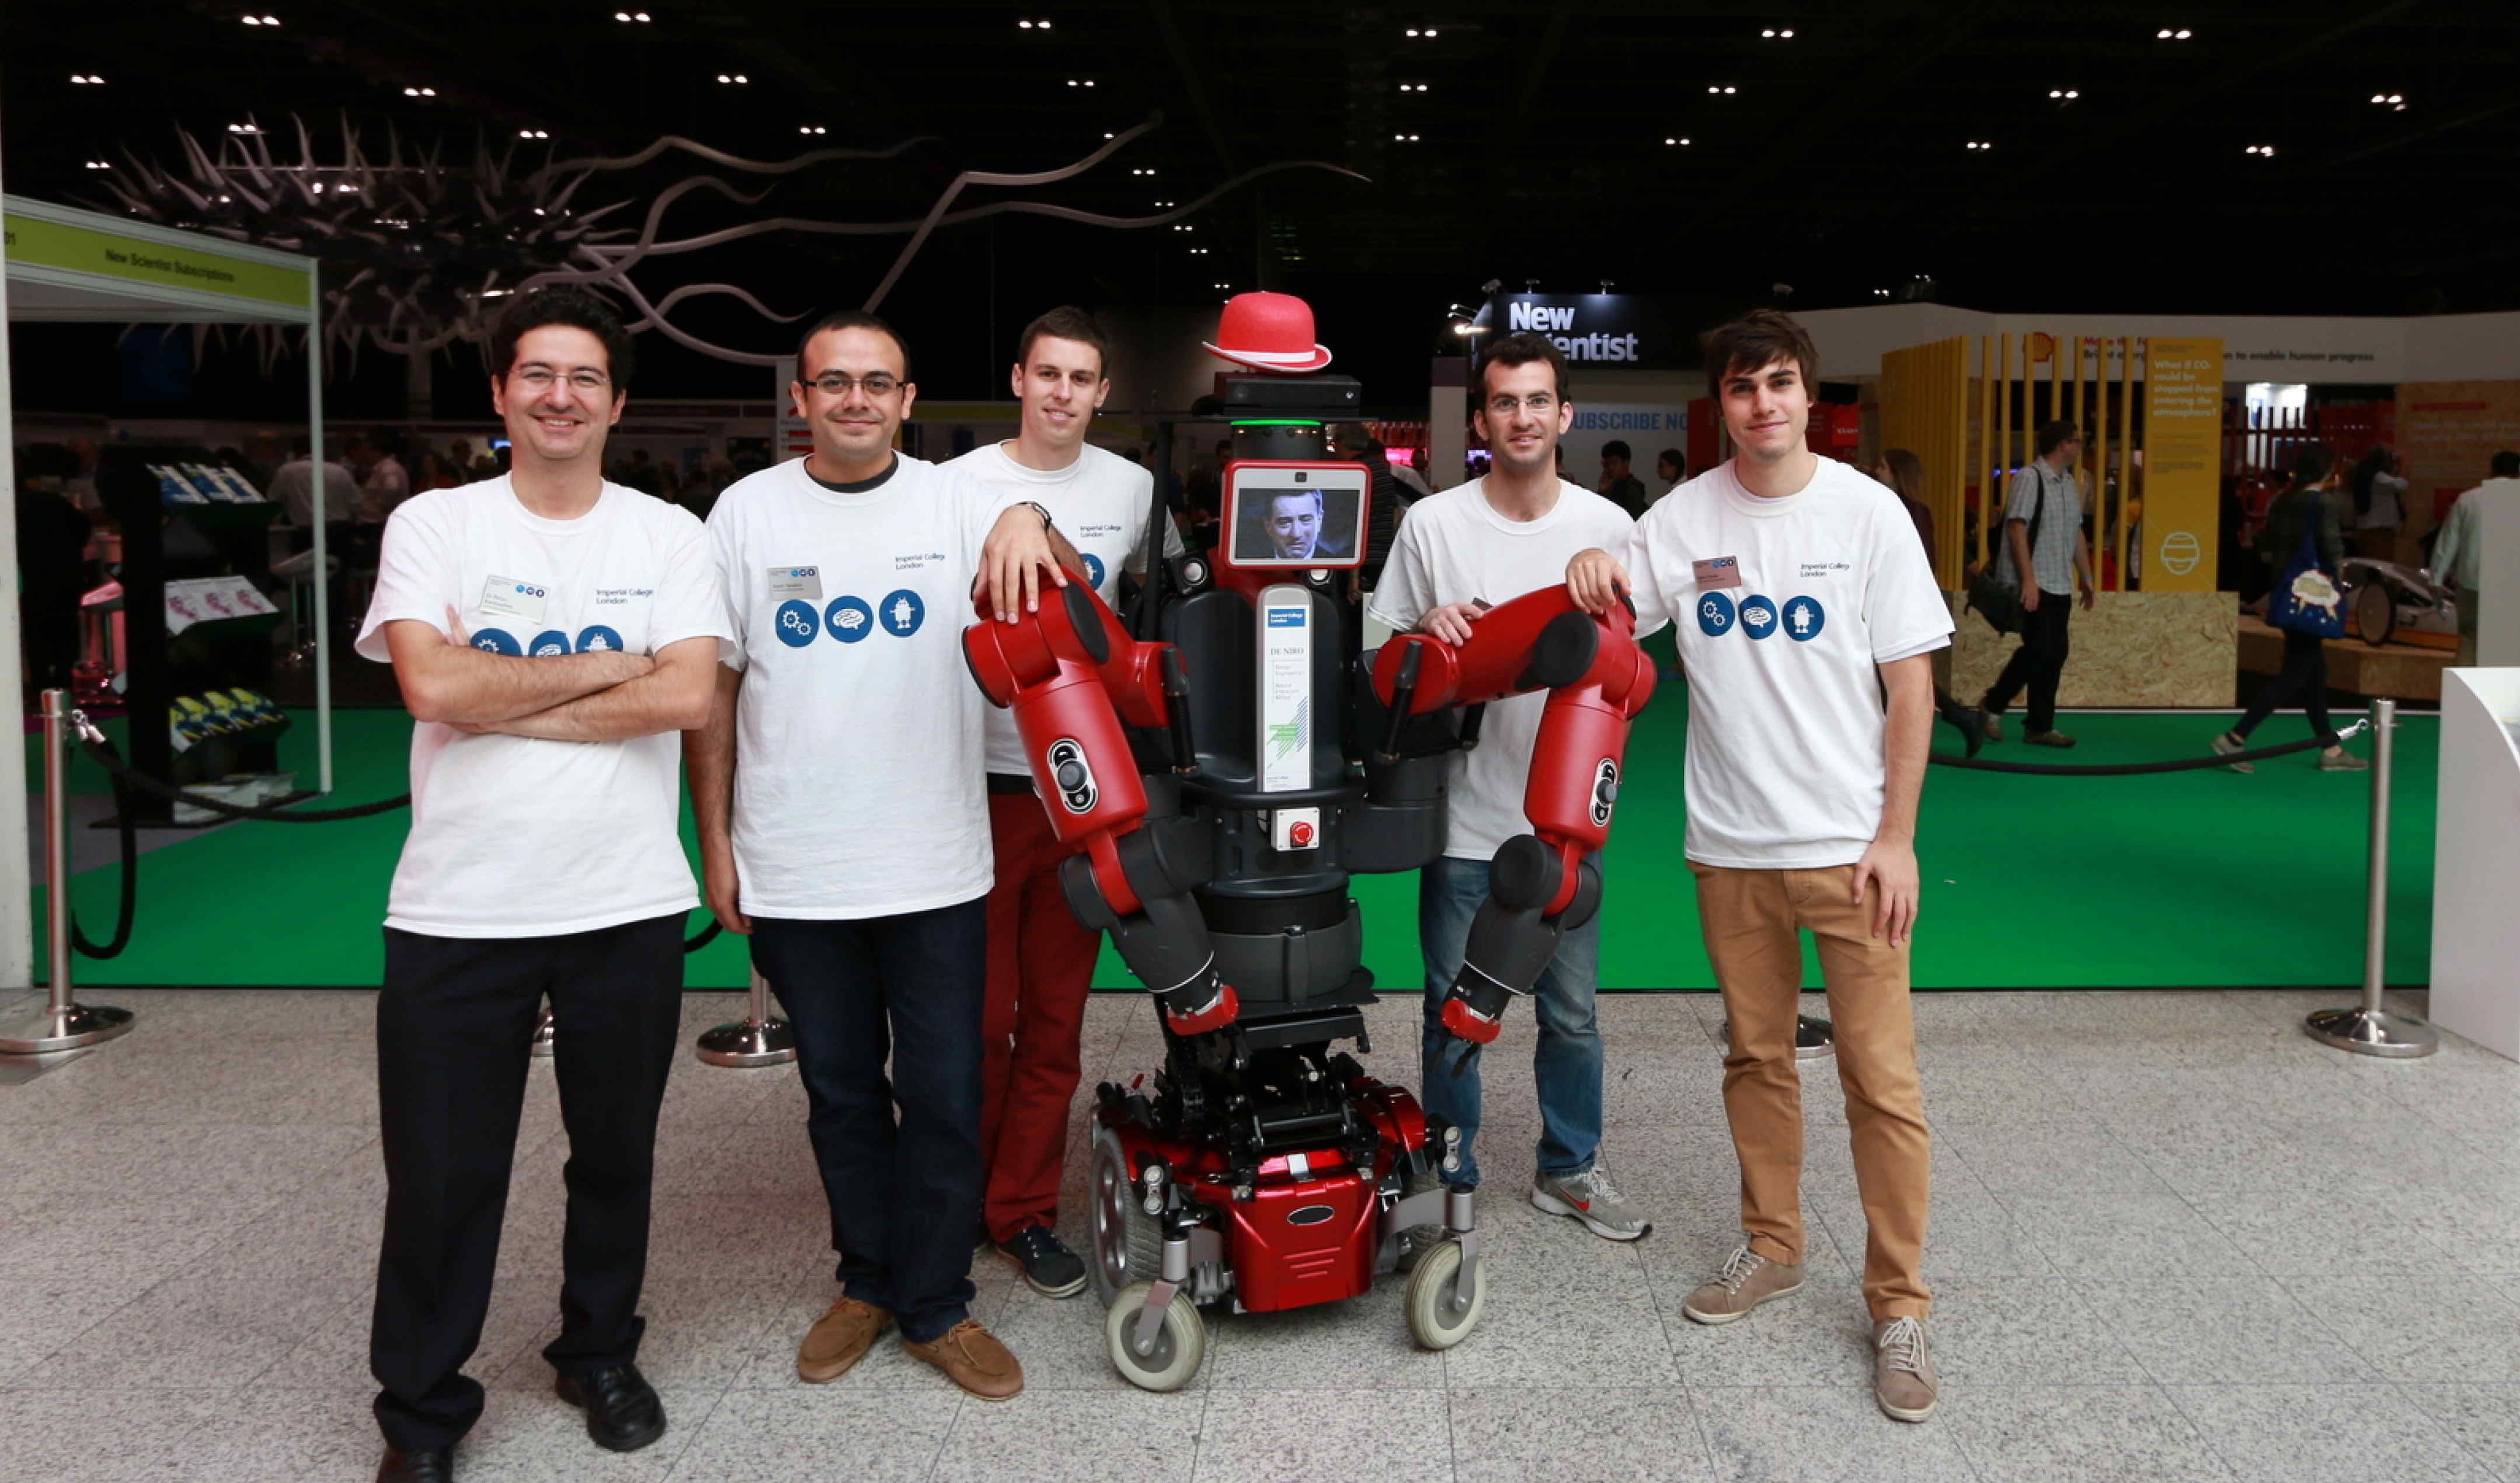 Group photo at Robot Intelligence Lab